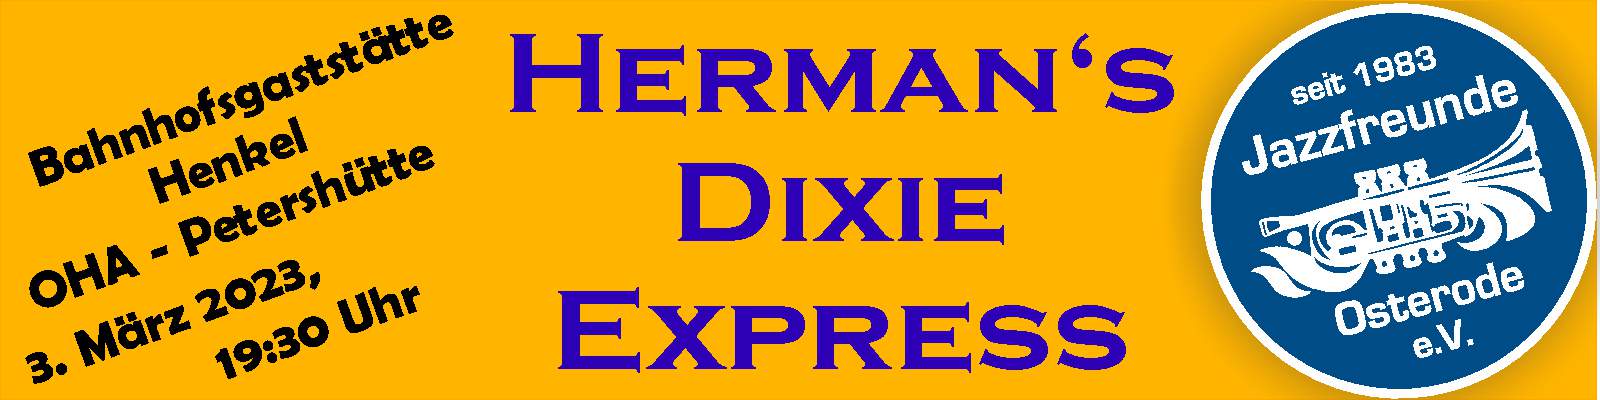 Hermans-Dixie-Express